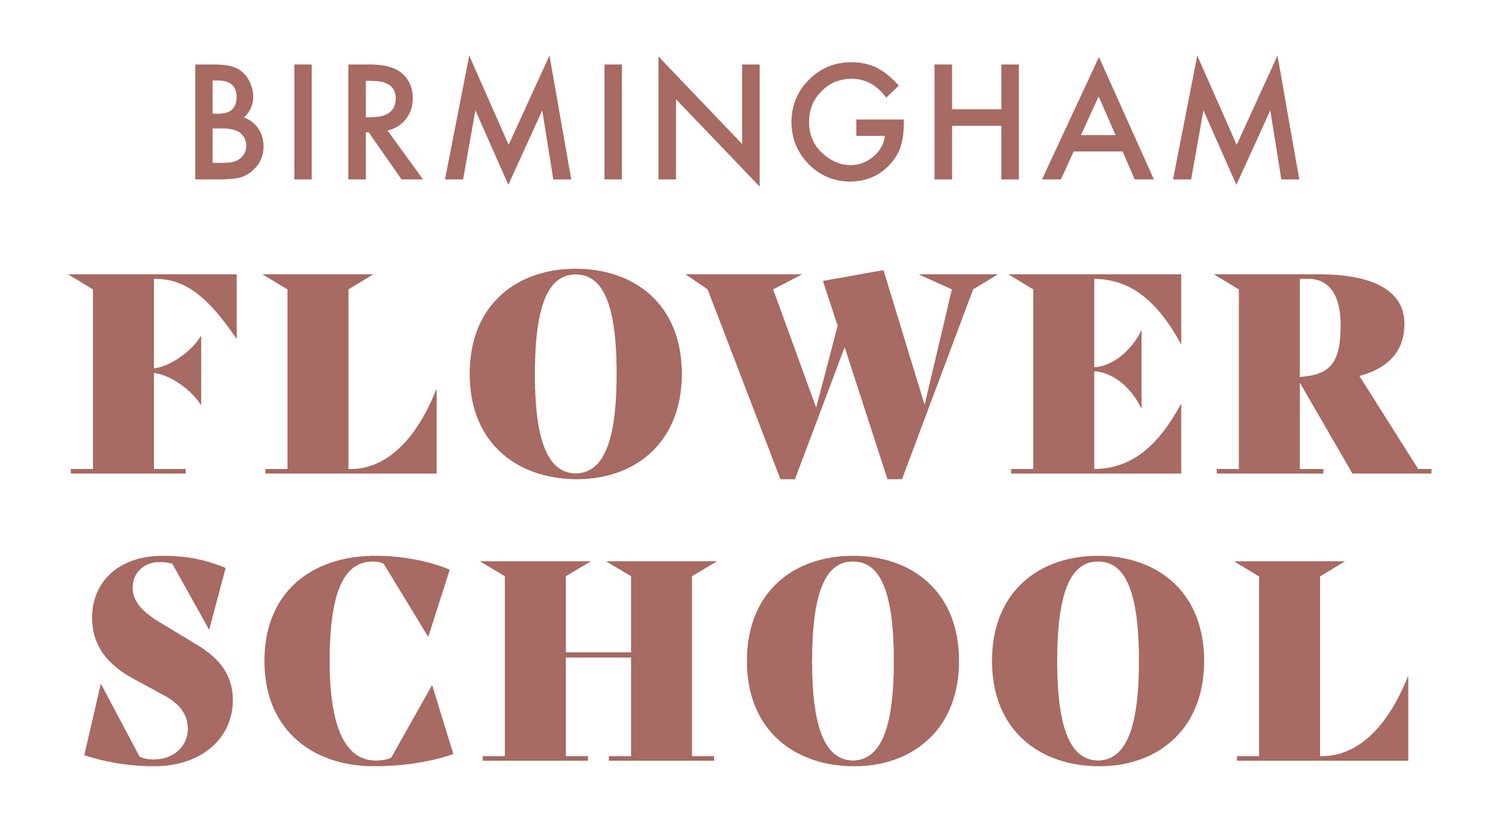 The Birmingham Flower School